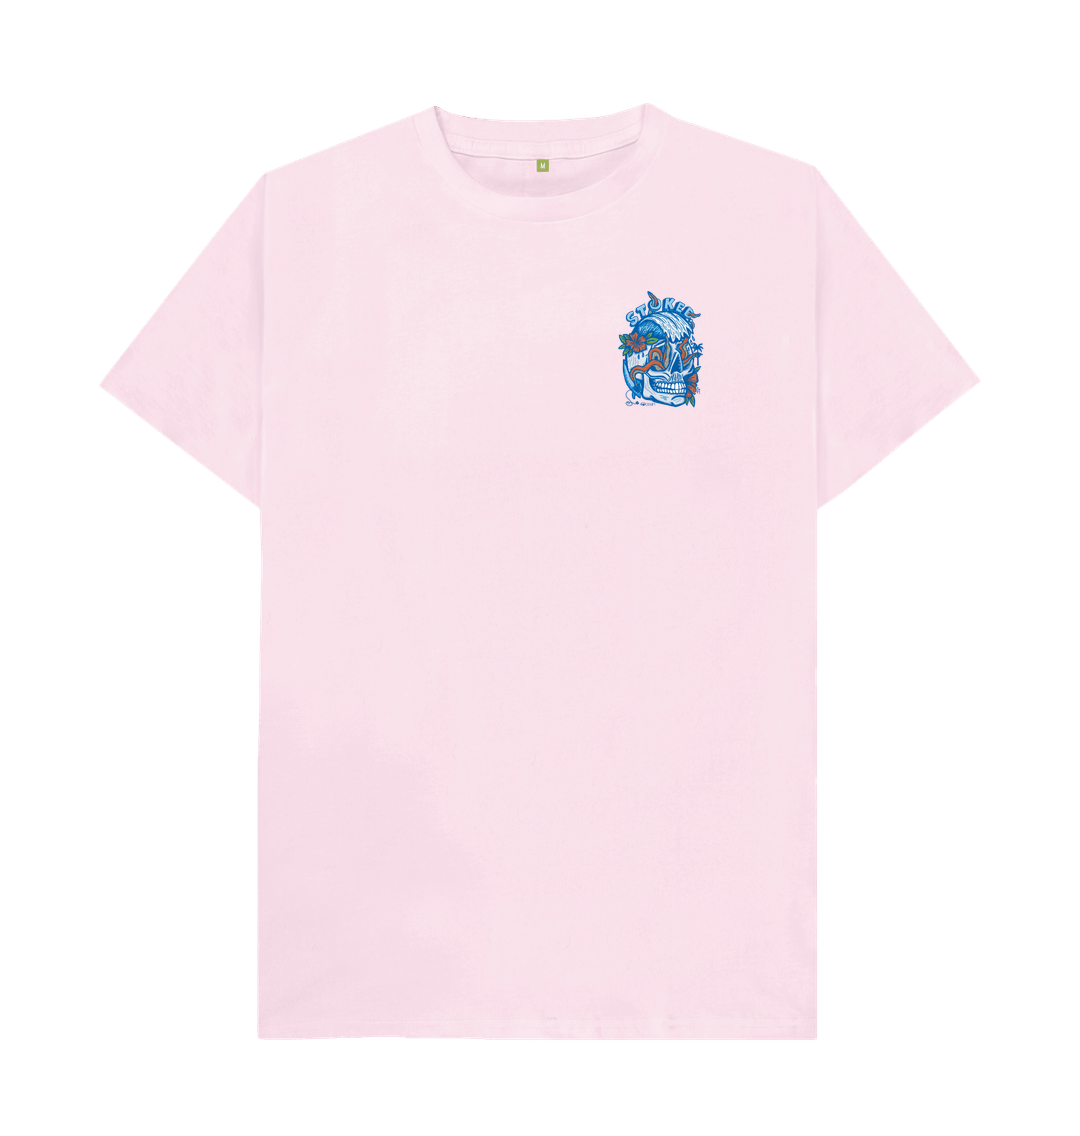 stoked_design_shirt_pink